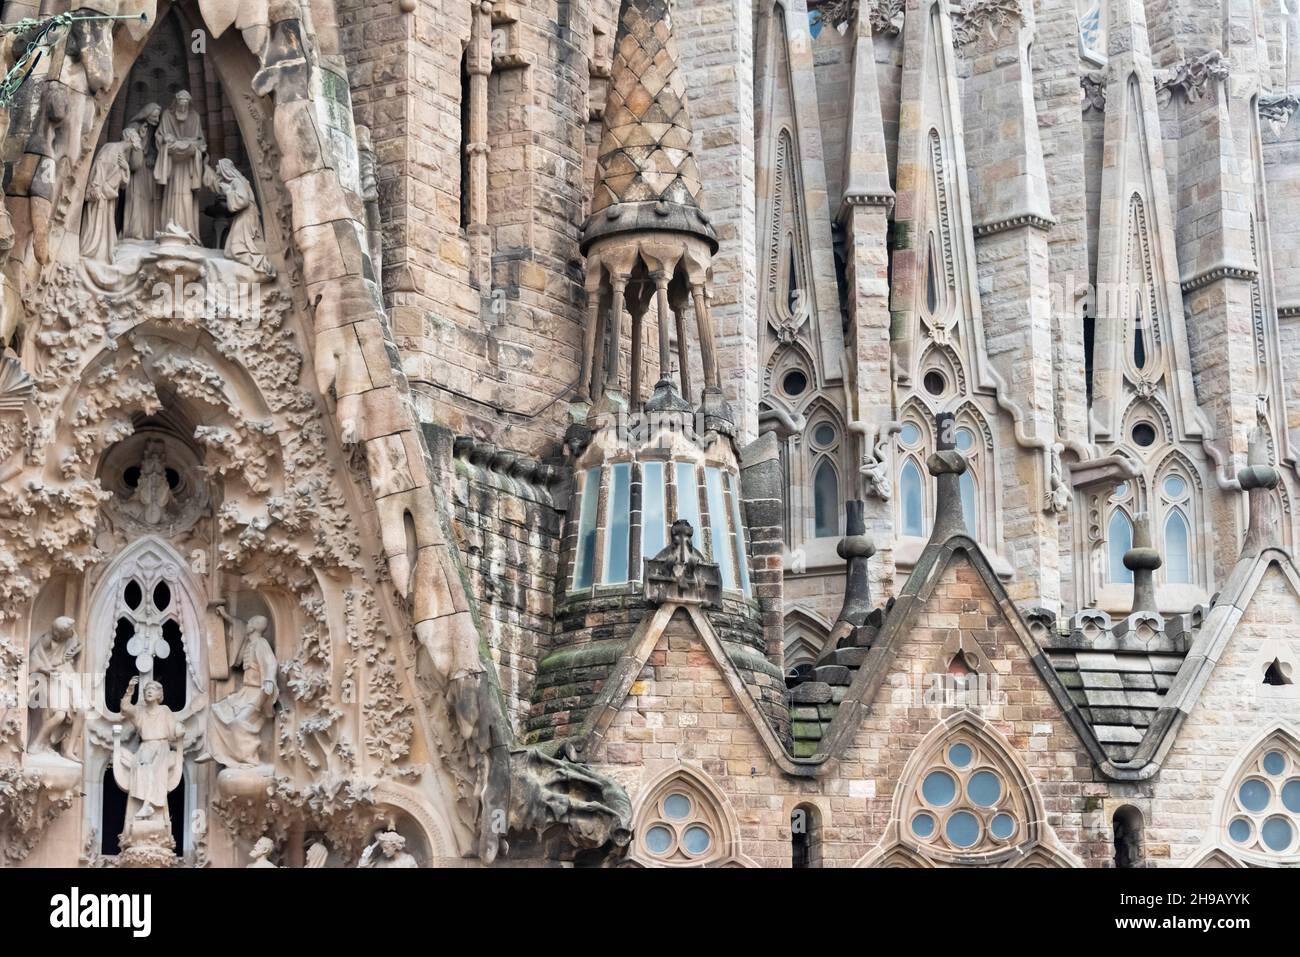 The Nativity facade of La Sagrada Familia by Gaudi, Barcelona, Barcelona Province, Catalonia Autonomous Community, Spain Stock Photo